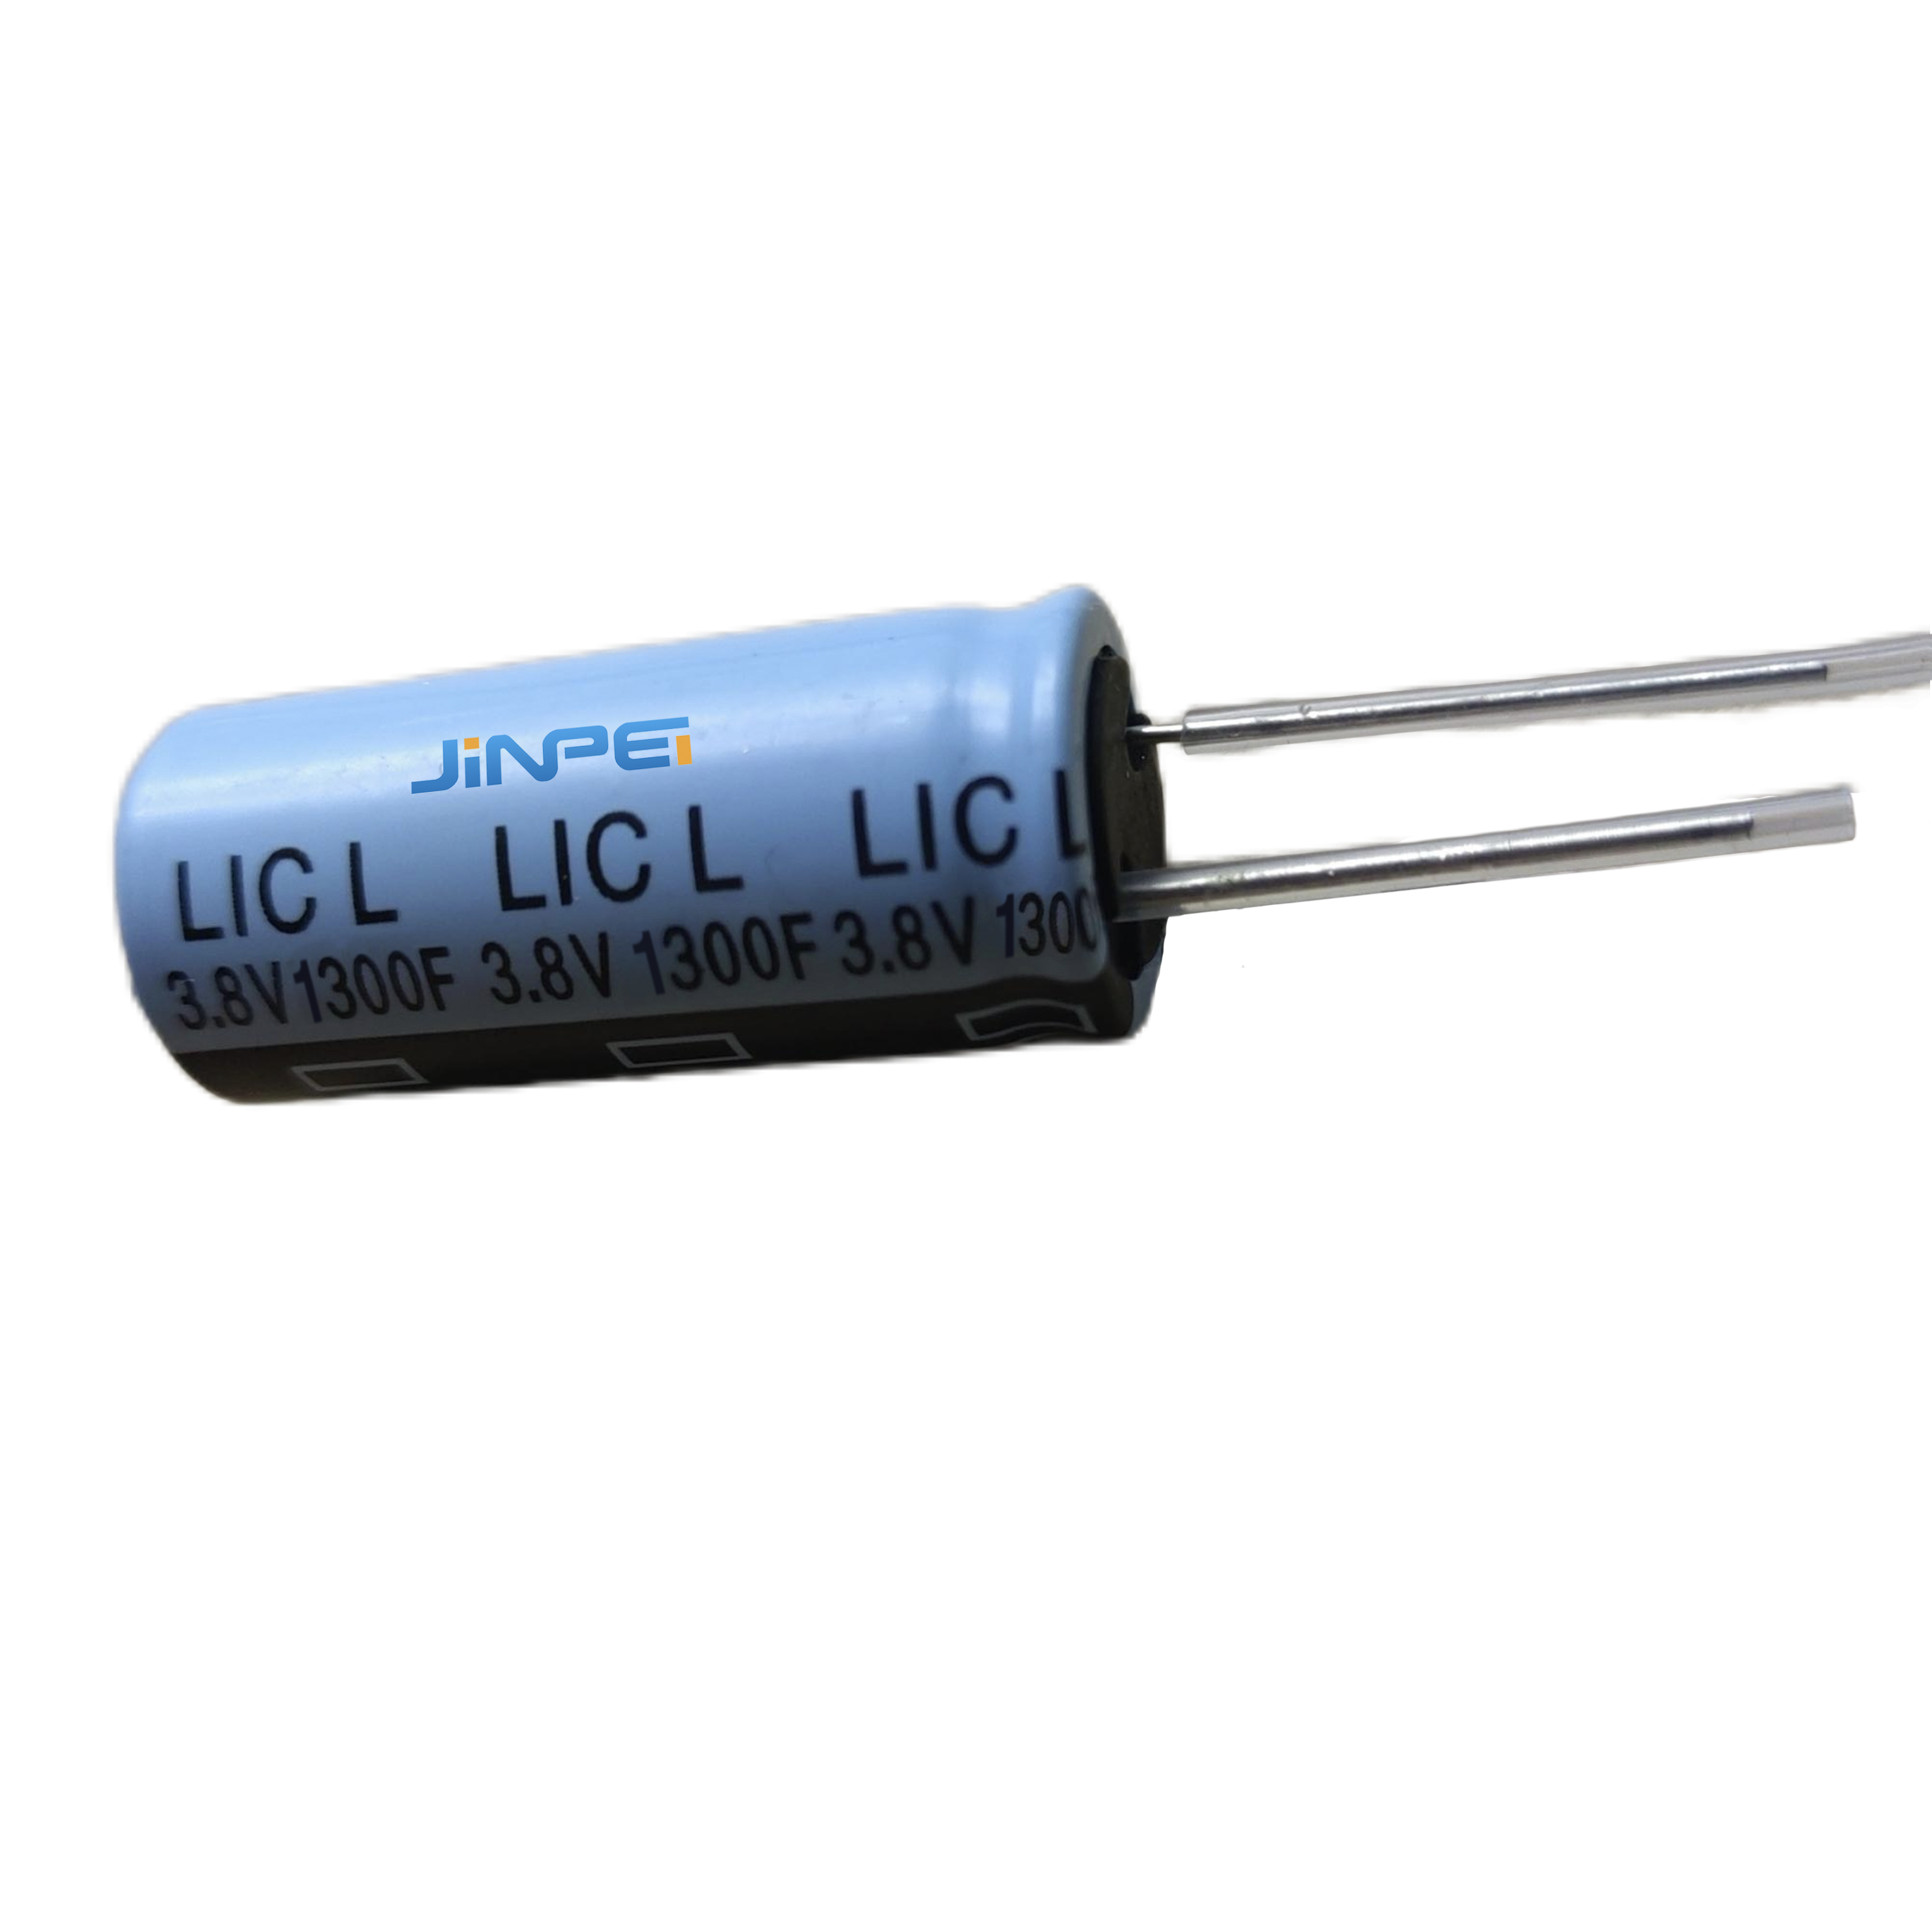 Radial lead lithium ion capacitor LIC 1300F